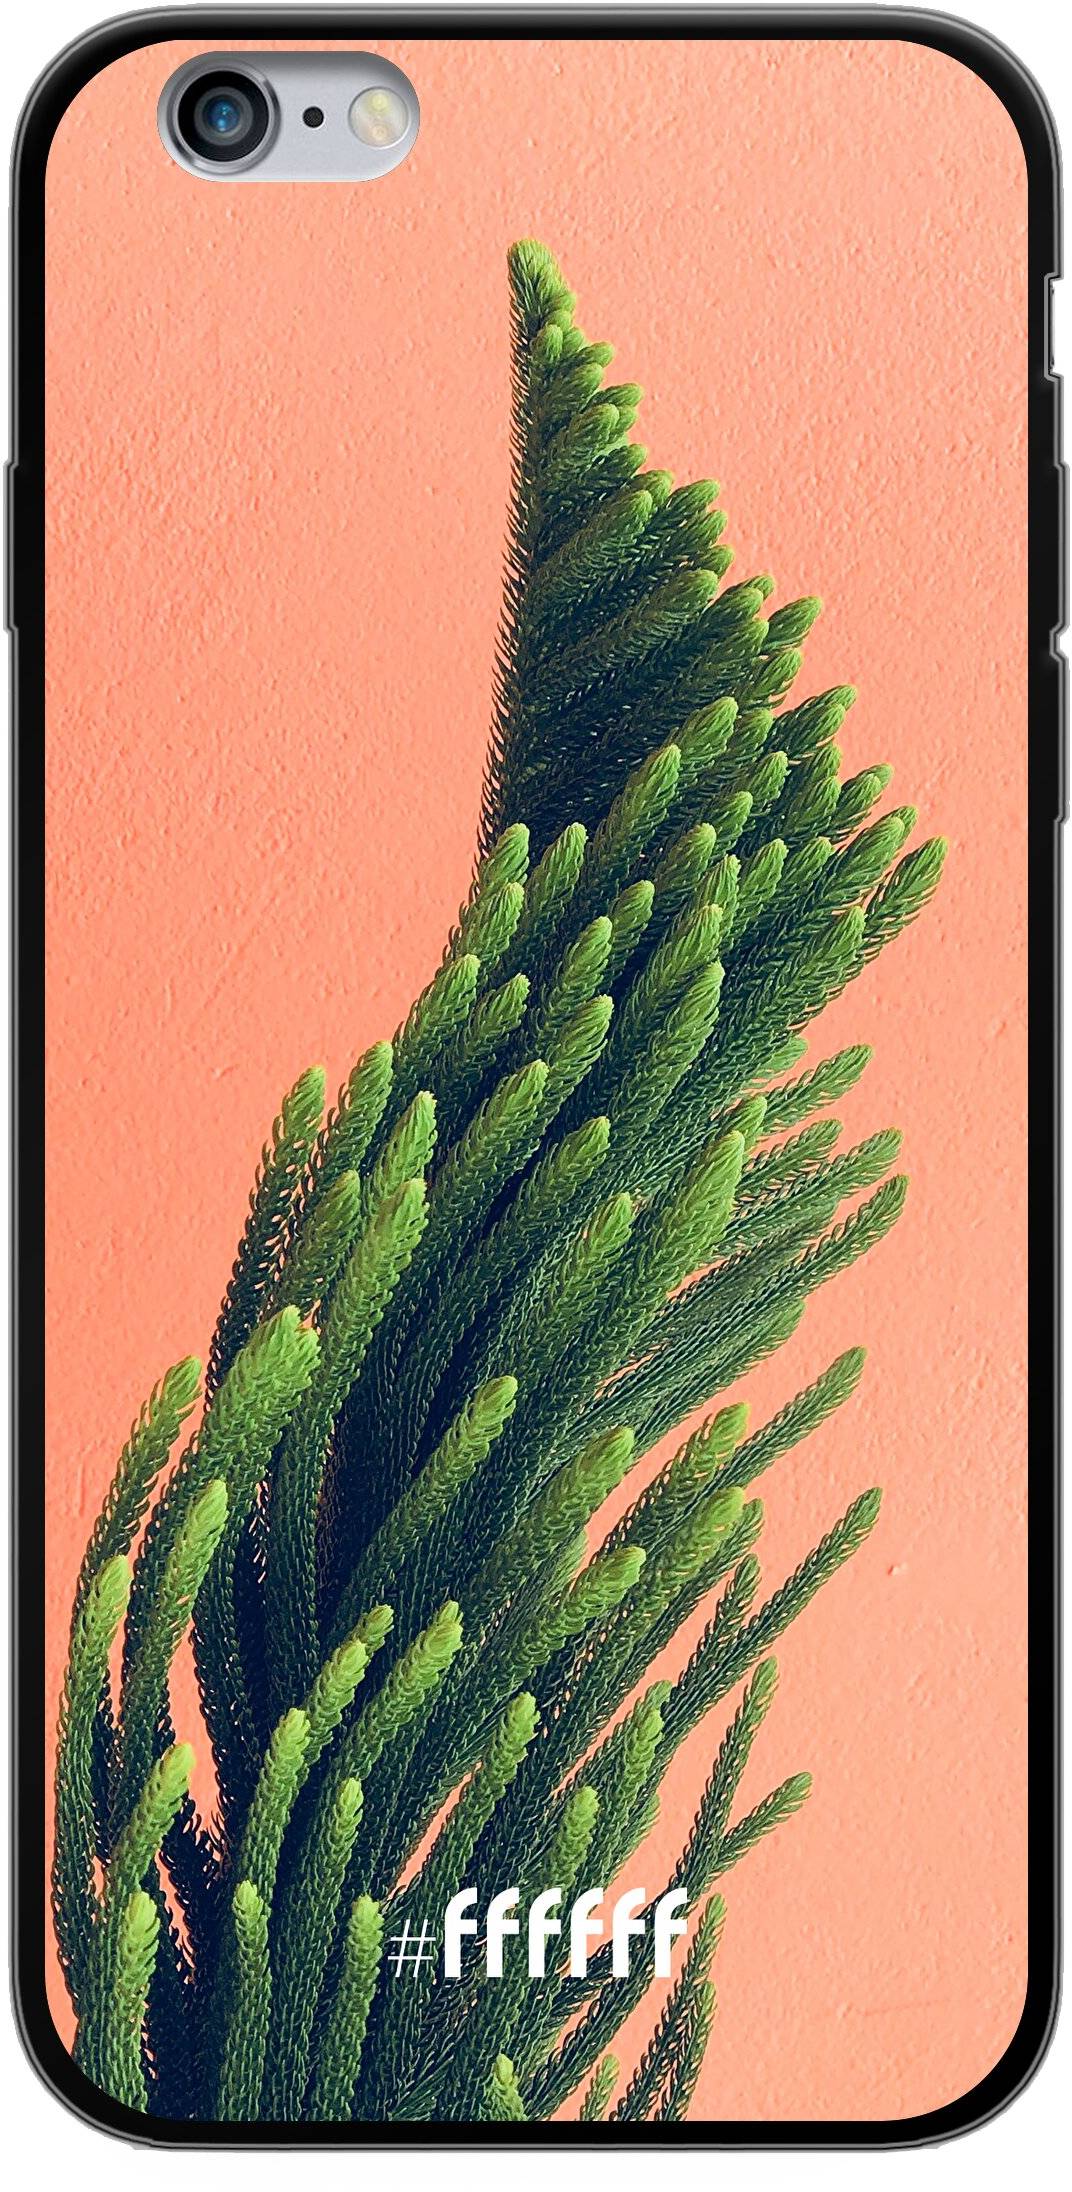 Waving Plant iPhone 6